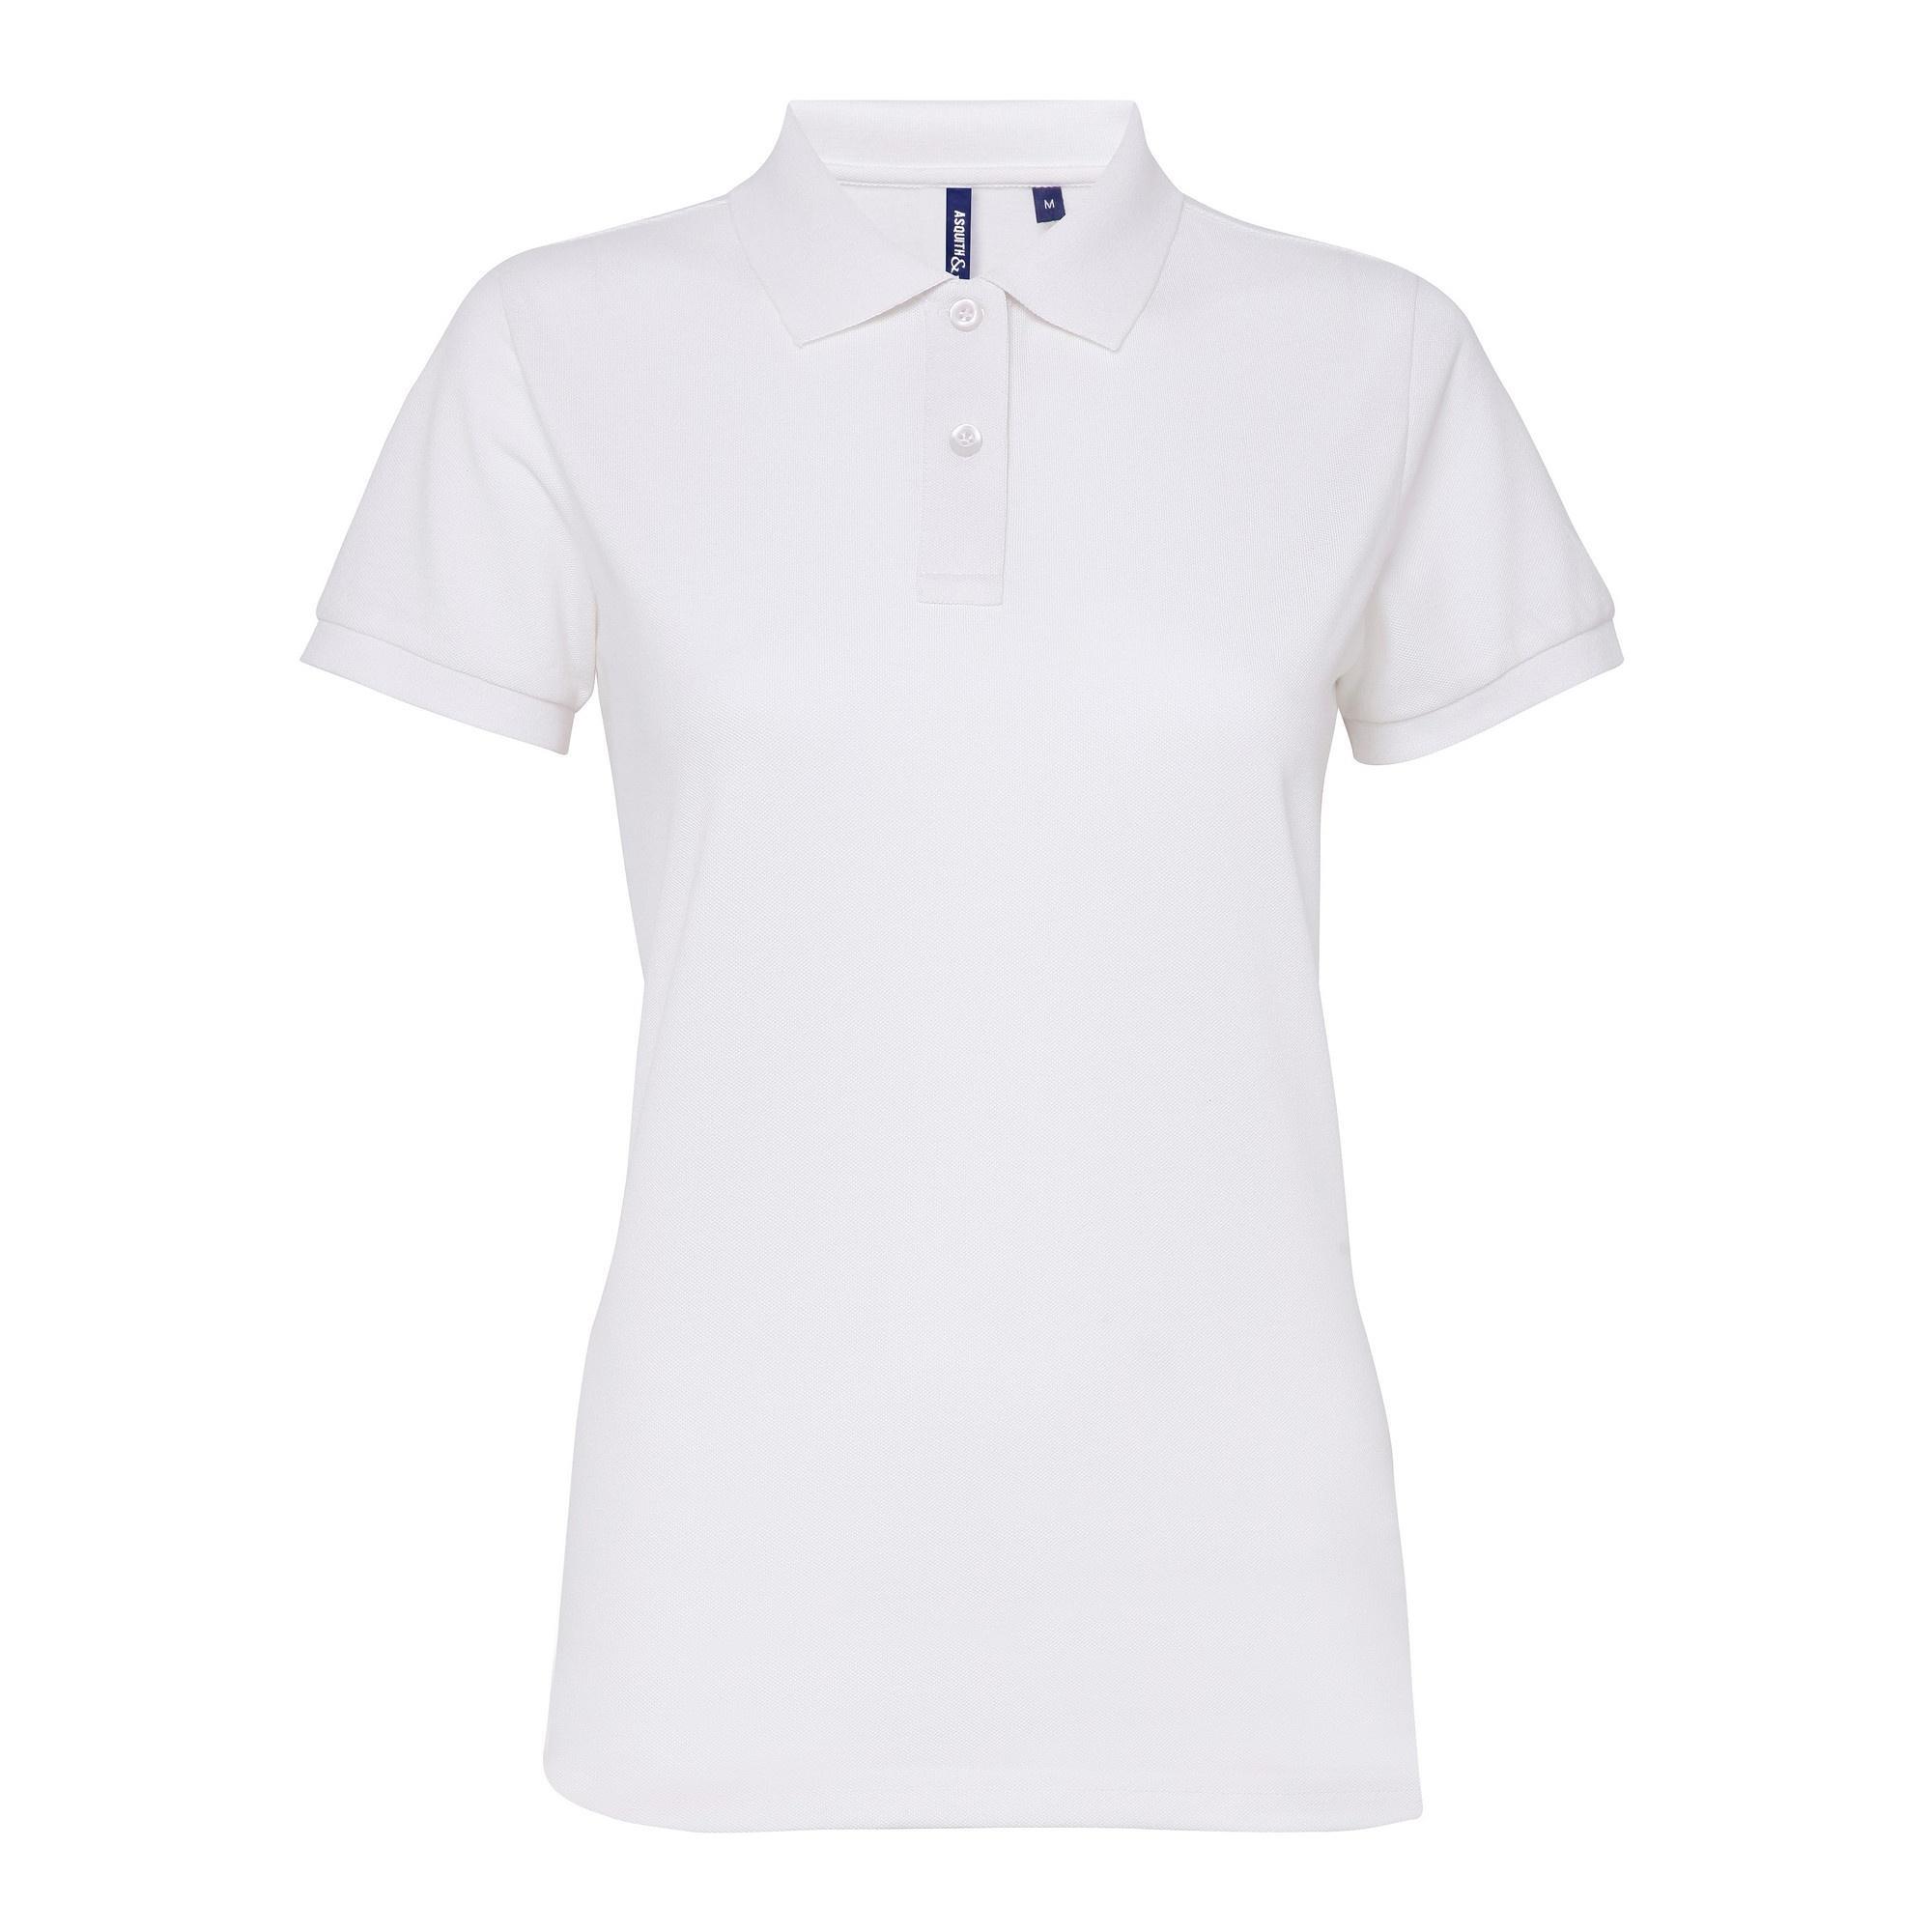 Asquith & Fox Womens/Ladies Short Sleeve Performance Blend Polo Shirt (White) (M)